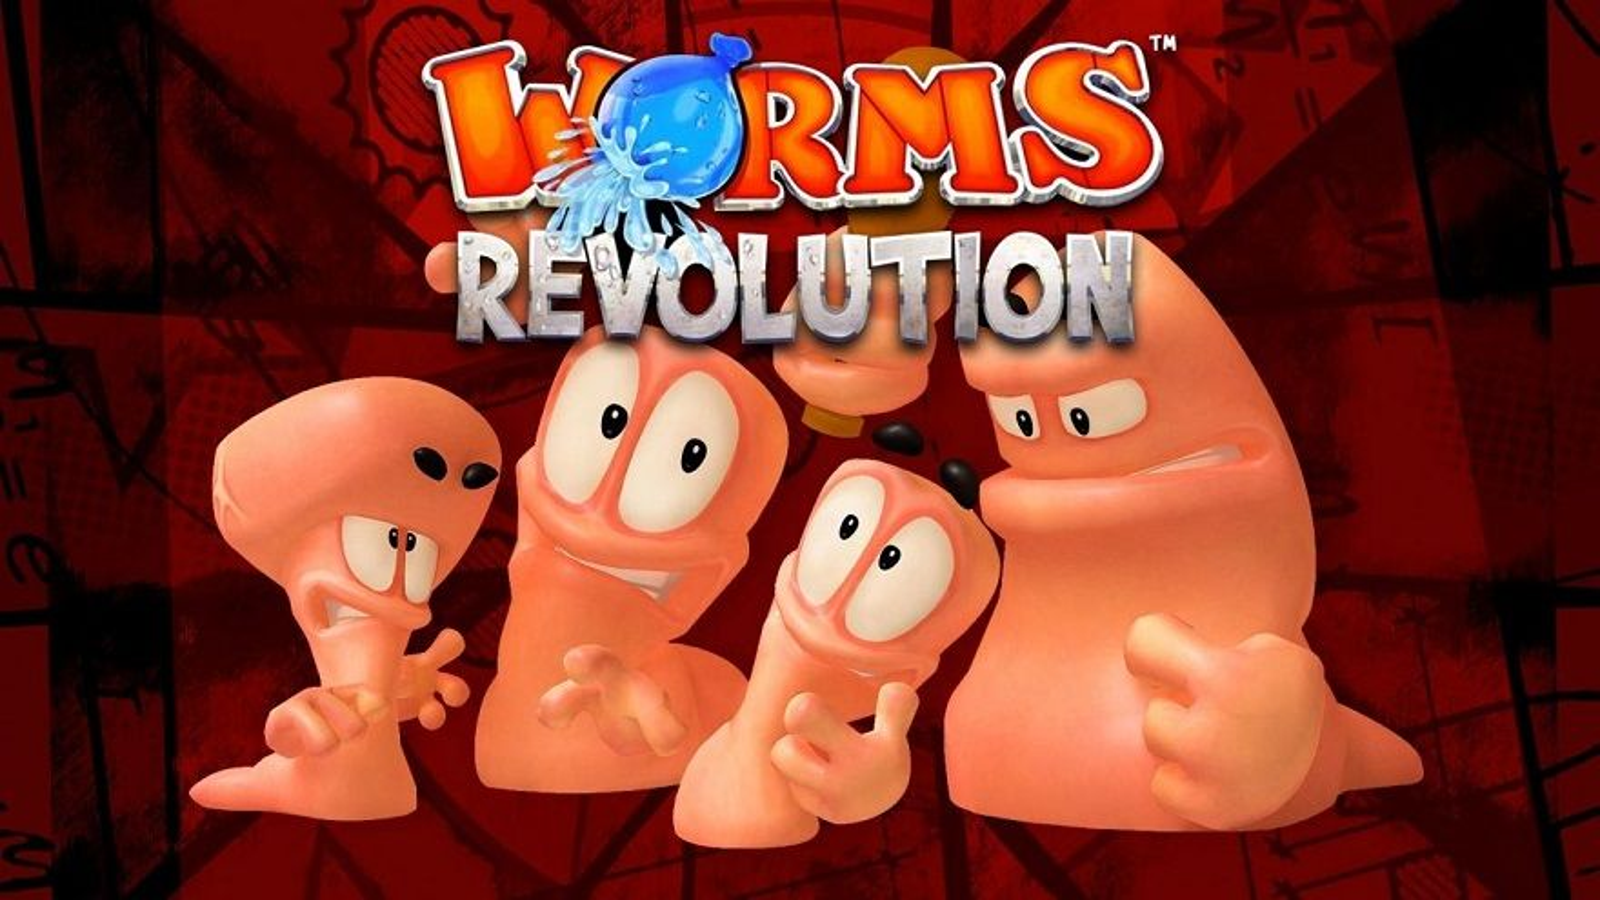 WORMS REVOLUTION COOP #1 - MINHOCAS TRETEIRAS! / Gameplay 1080p PT-BR 